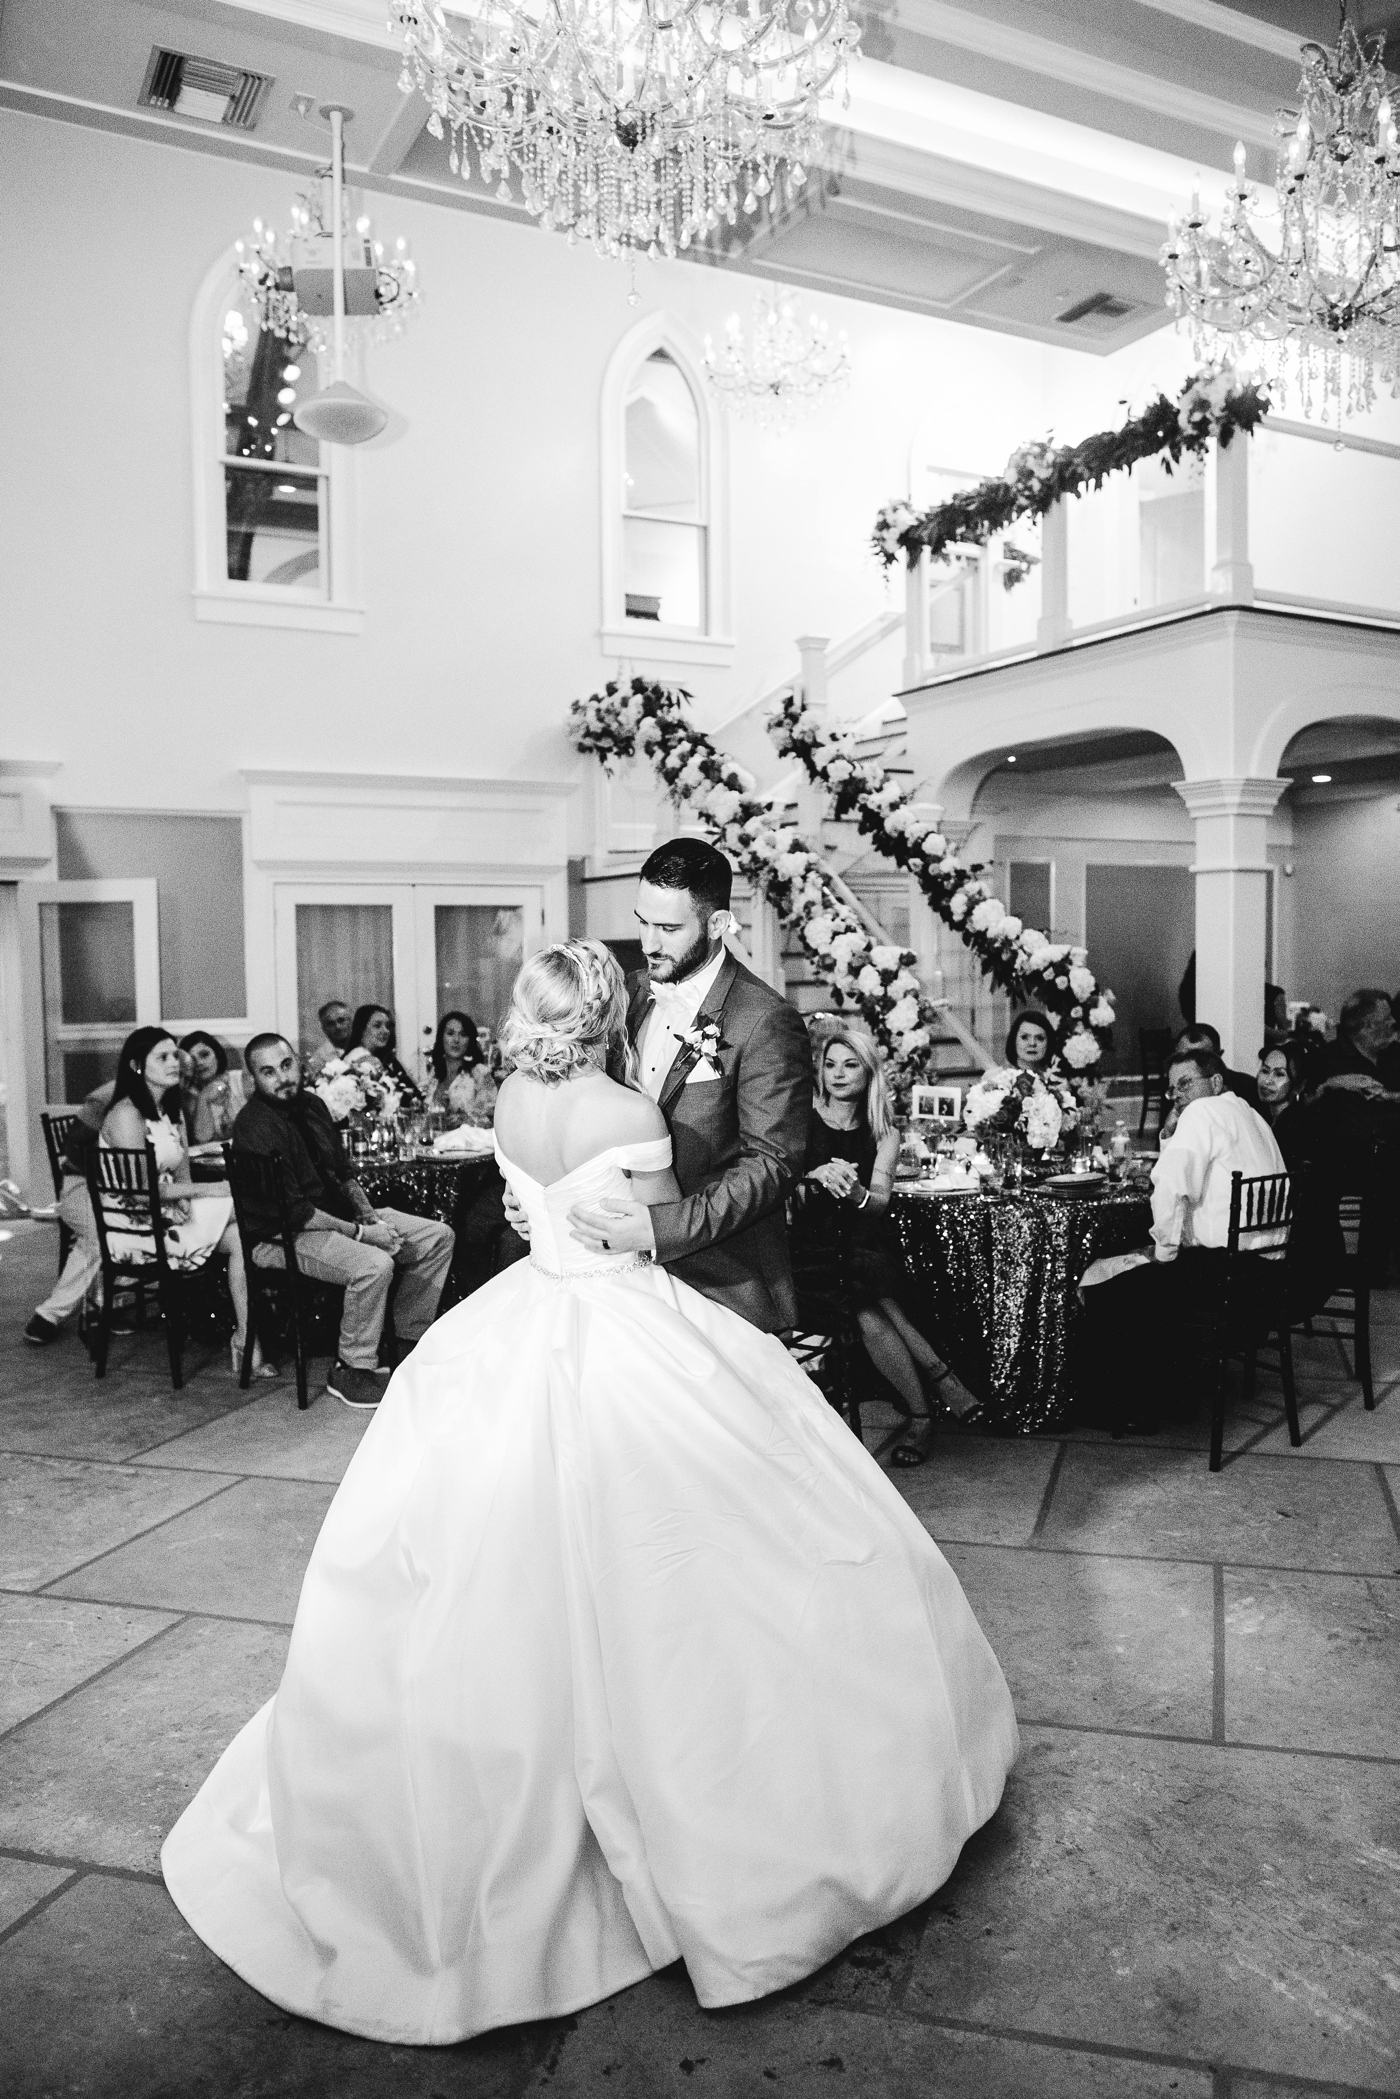 Wedding Reception at Tybee Island Wedding Chapel | Izzy and Co.